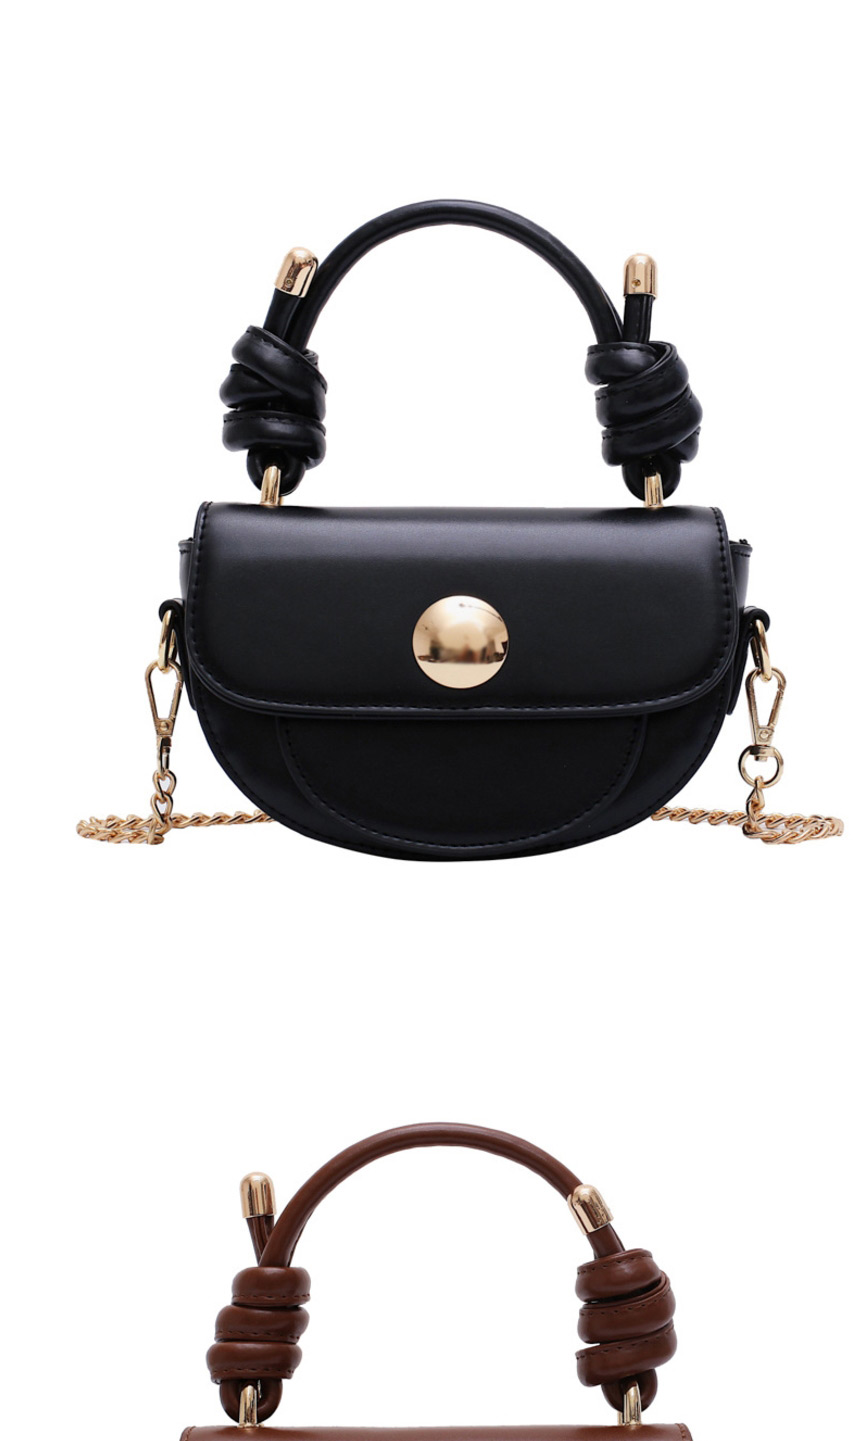 Fashion Red Chain Shoulder Portable Messenger Bag,Handbags